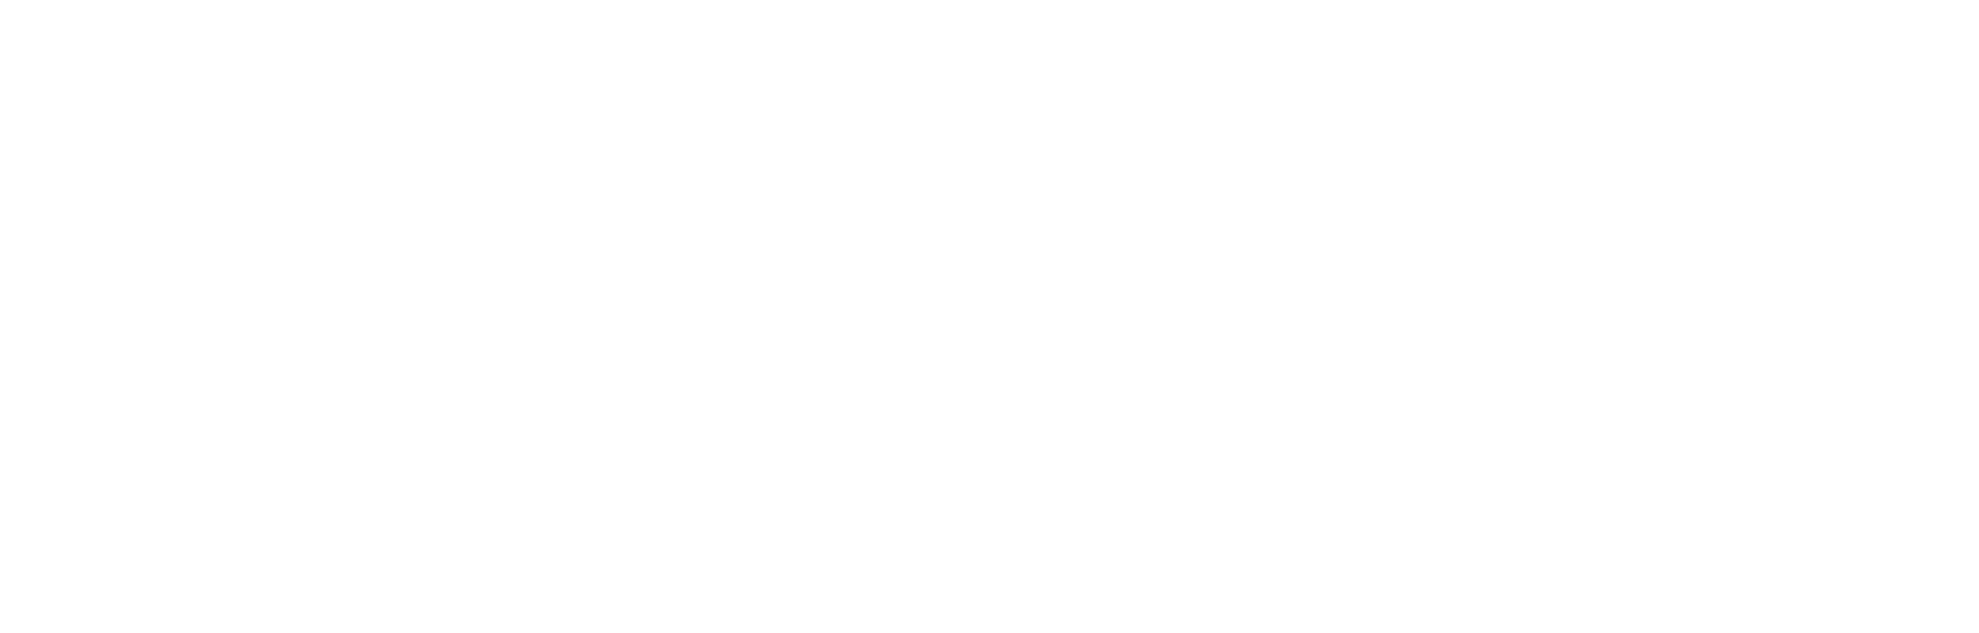 Spurrs Corner Church